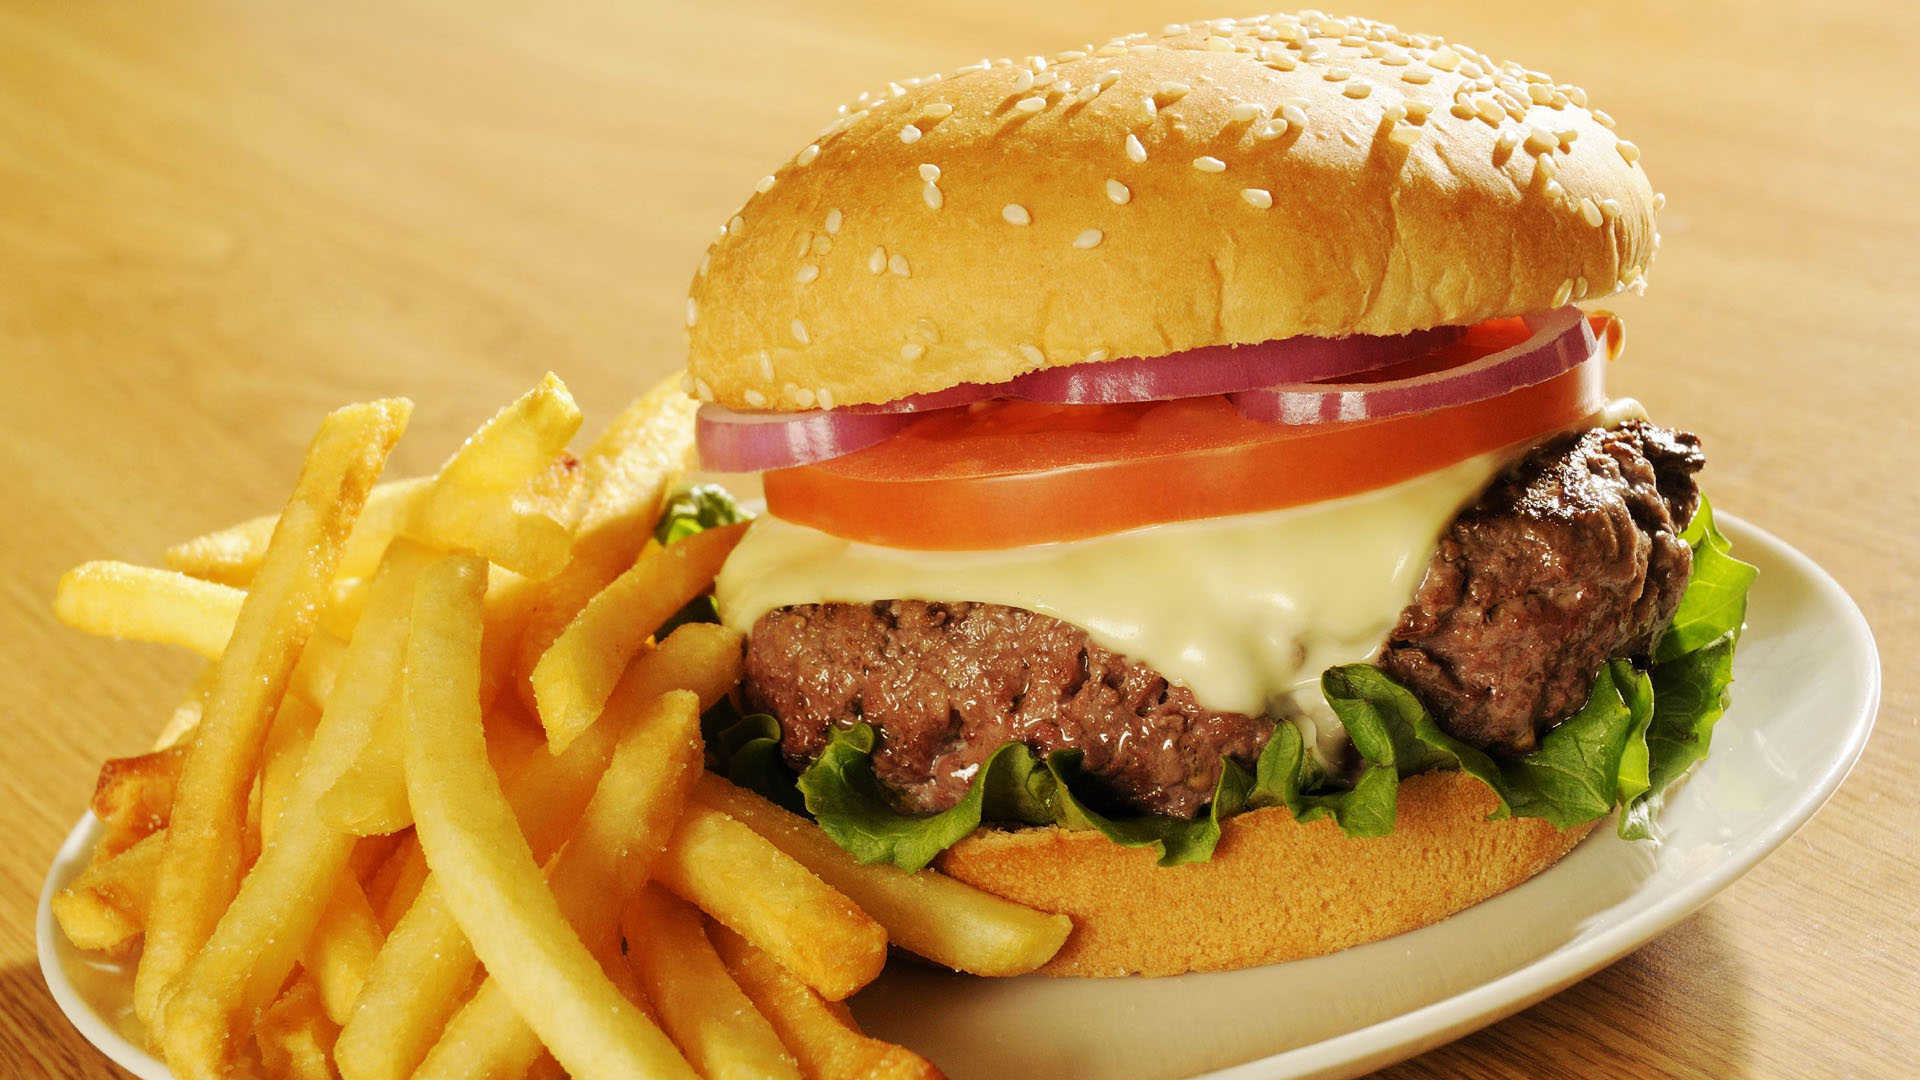 1920x1080 Burger Wallpaper 8 | Foods Wallpapers | Pinterest | Burgers and Food